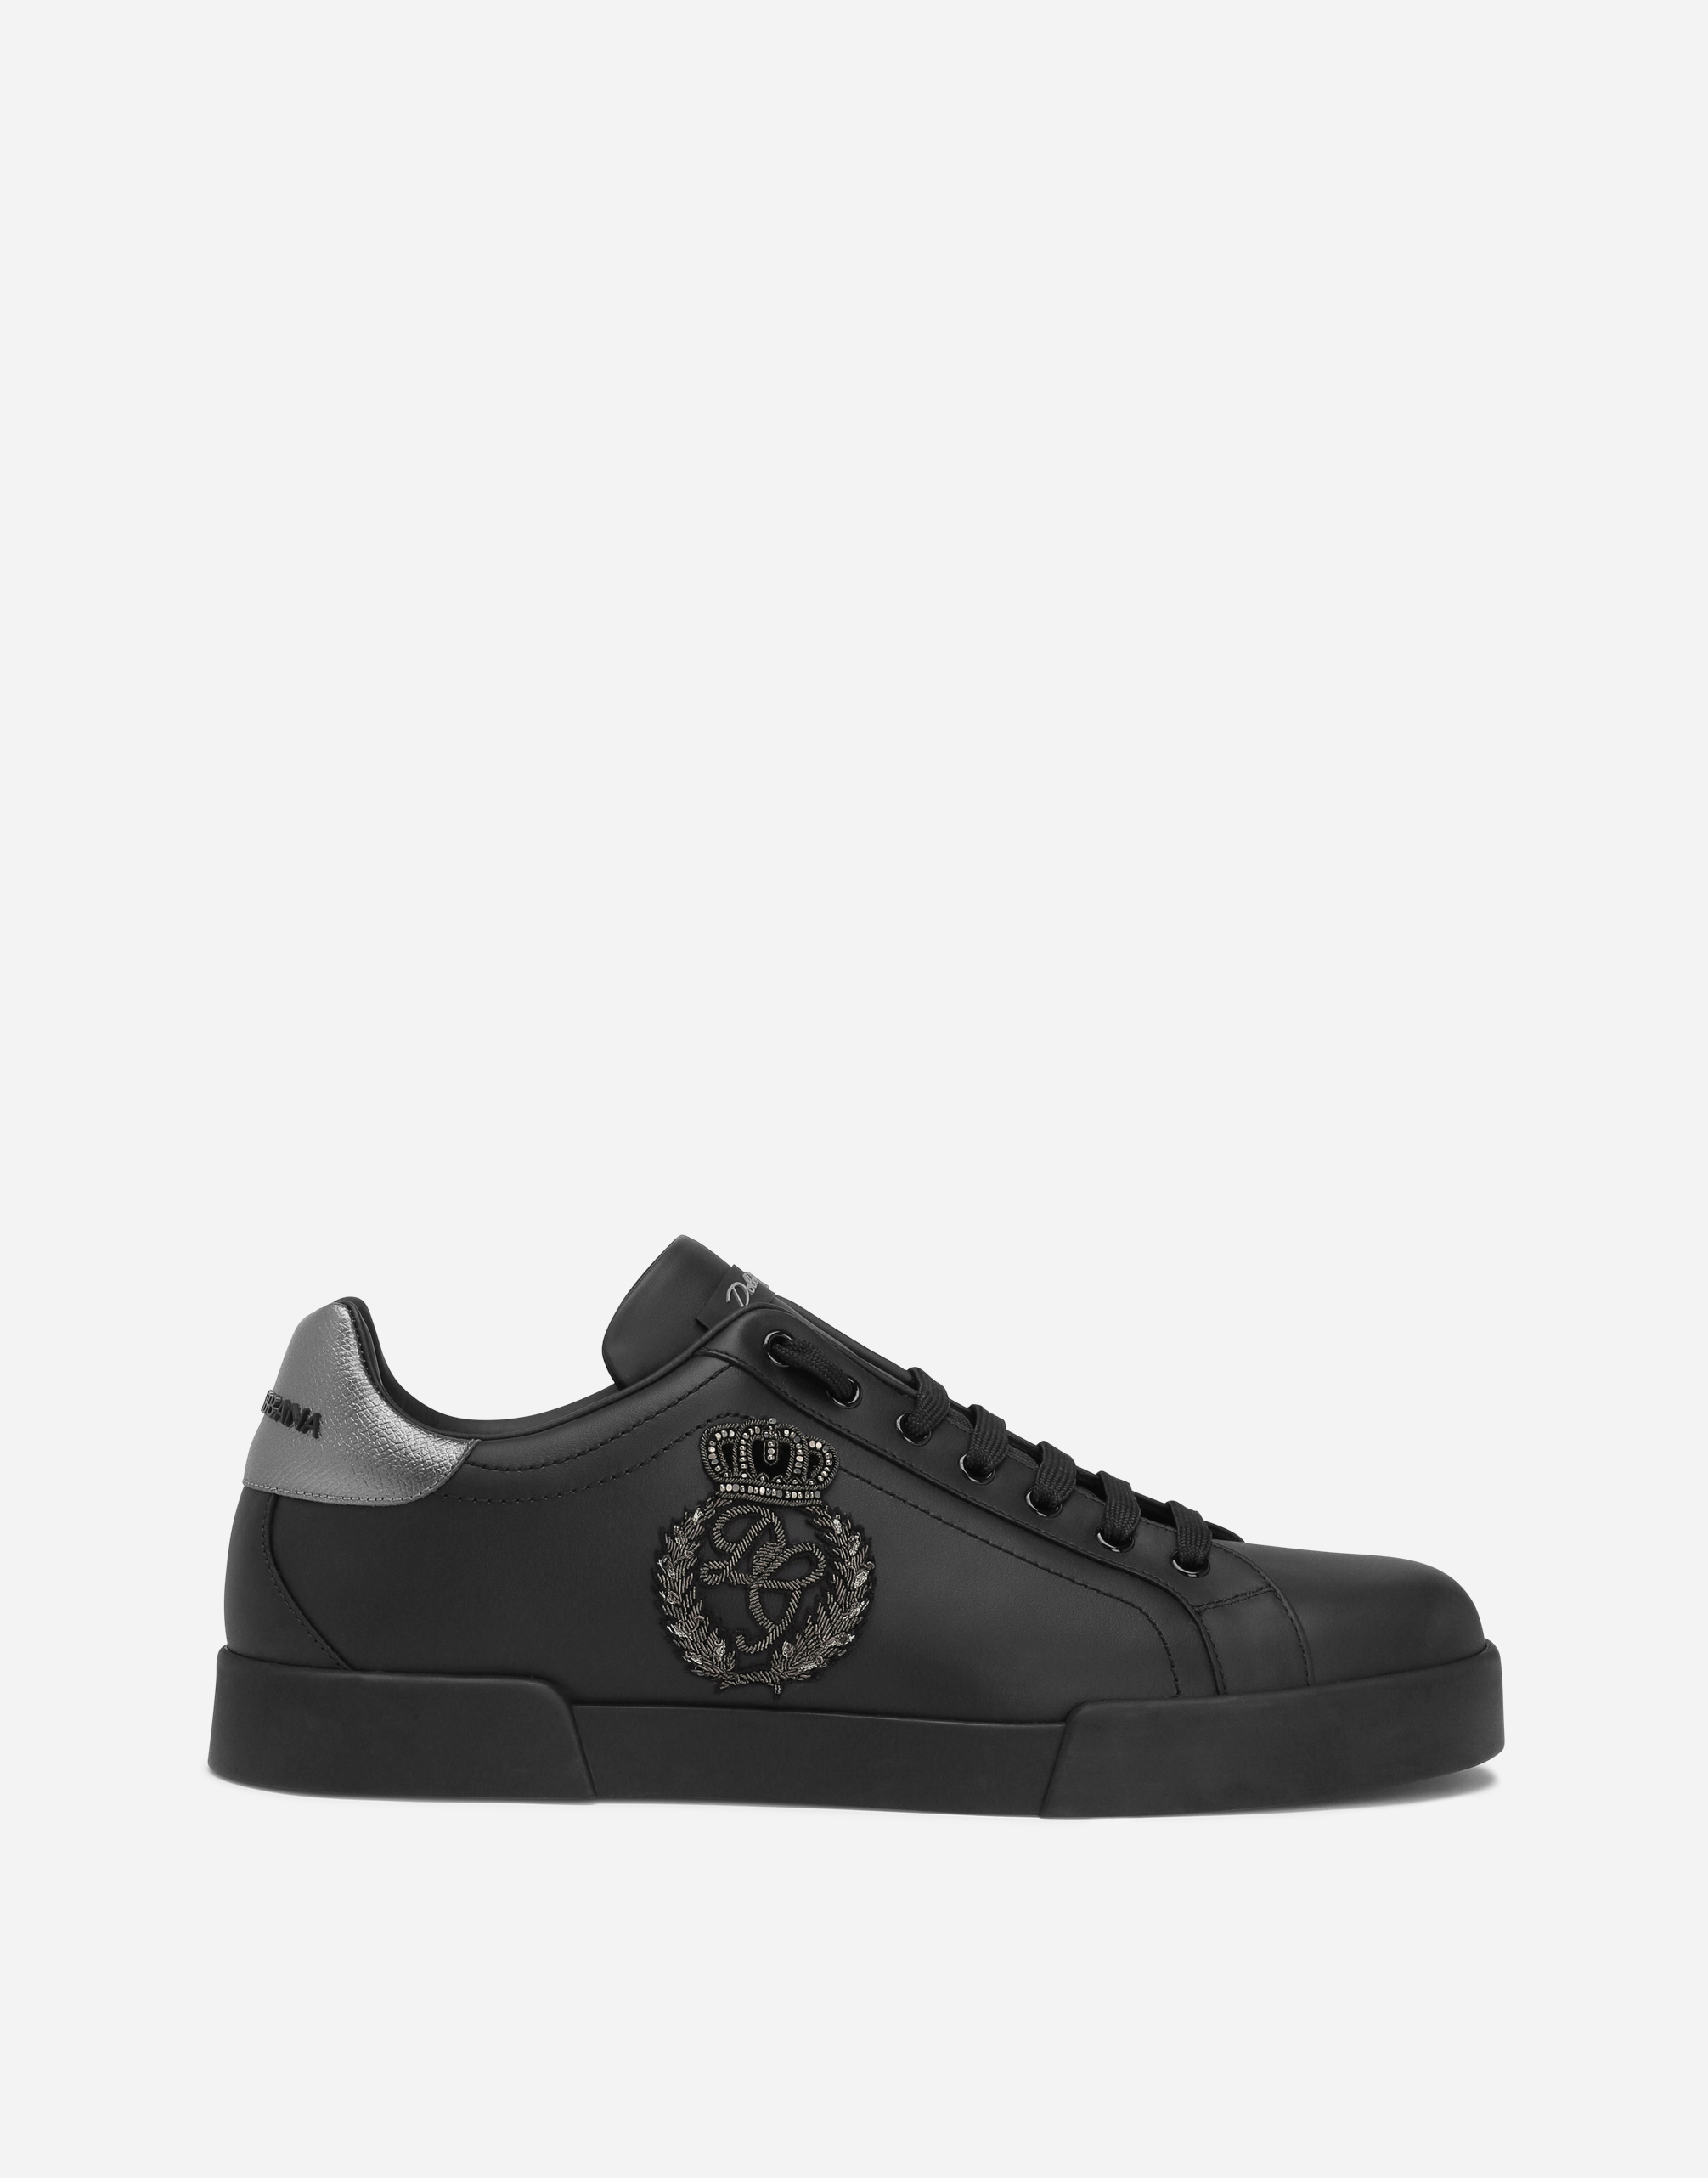 Dolce & Gabbana Calfskin Nappa Portofino Sneakers With Crown Patch In Black/silver